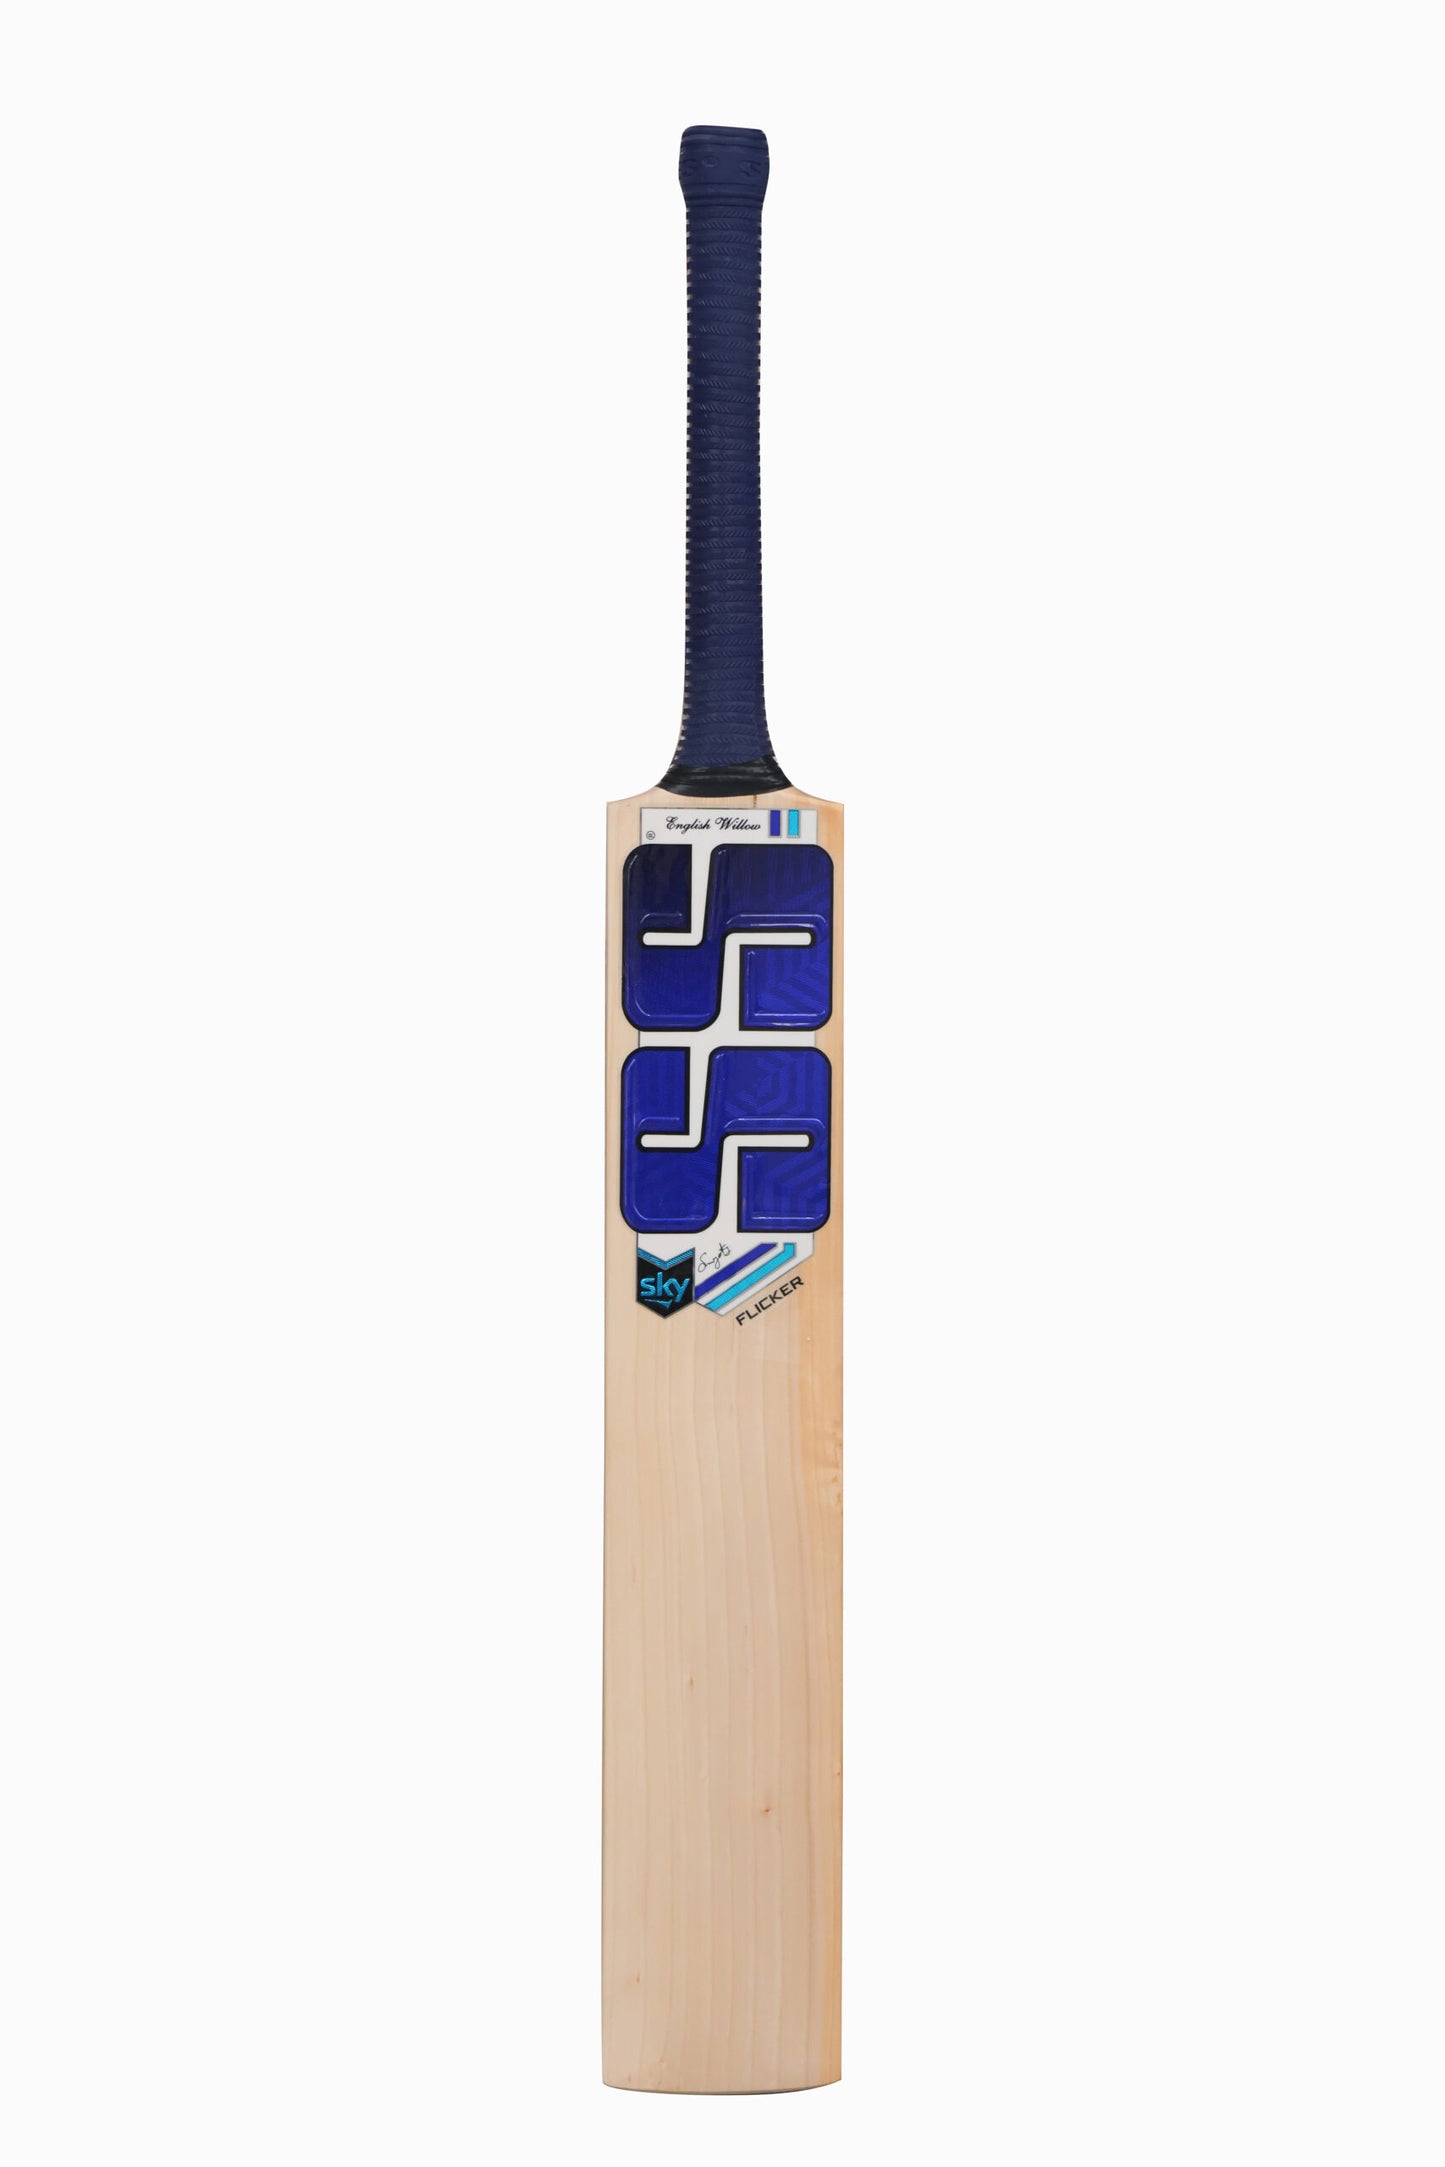 SS Sky Flicker English Willow Cricket Bat – Size-6